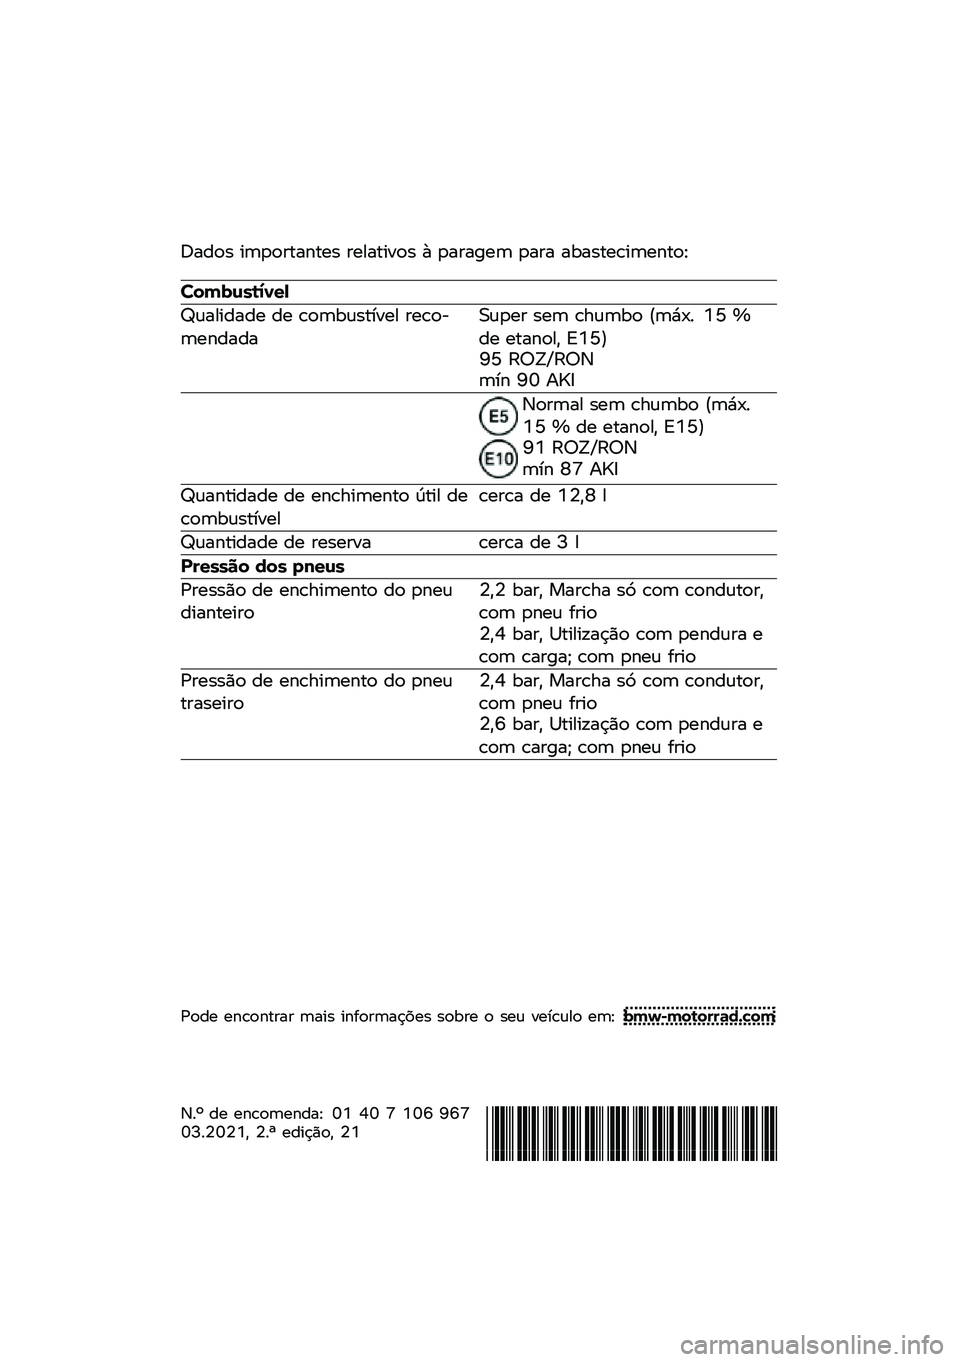 BMW MOTORRAD C 400 GT 2021  Manual do condutor (in Portuguese) �F����$ �
����\f������$ �\f�����
���$ �/ ���\f���� ���\f� ��&��$����
������G
�������\b�	�\f�
�
�H�	���
���� �� ����&�	�$����� �\f����)��